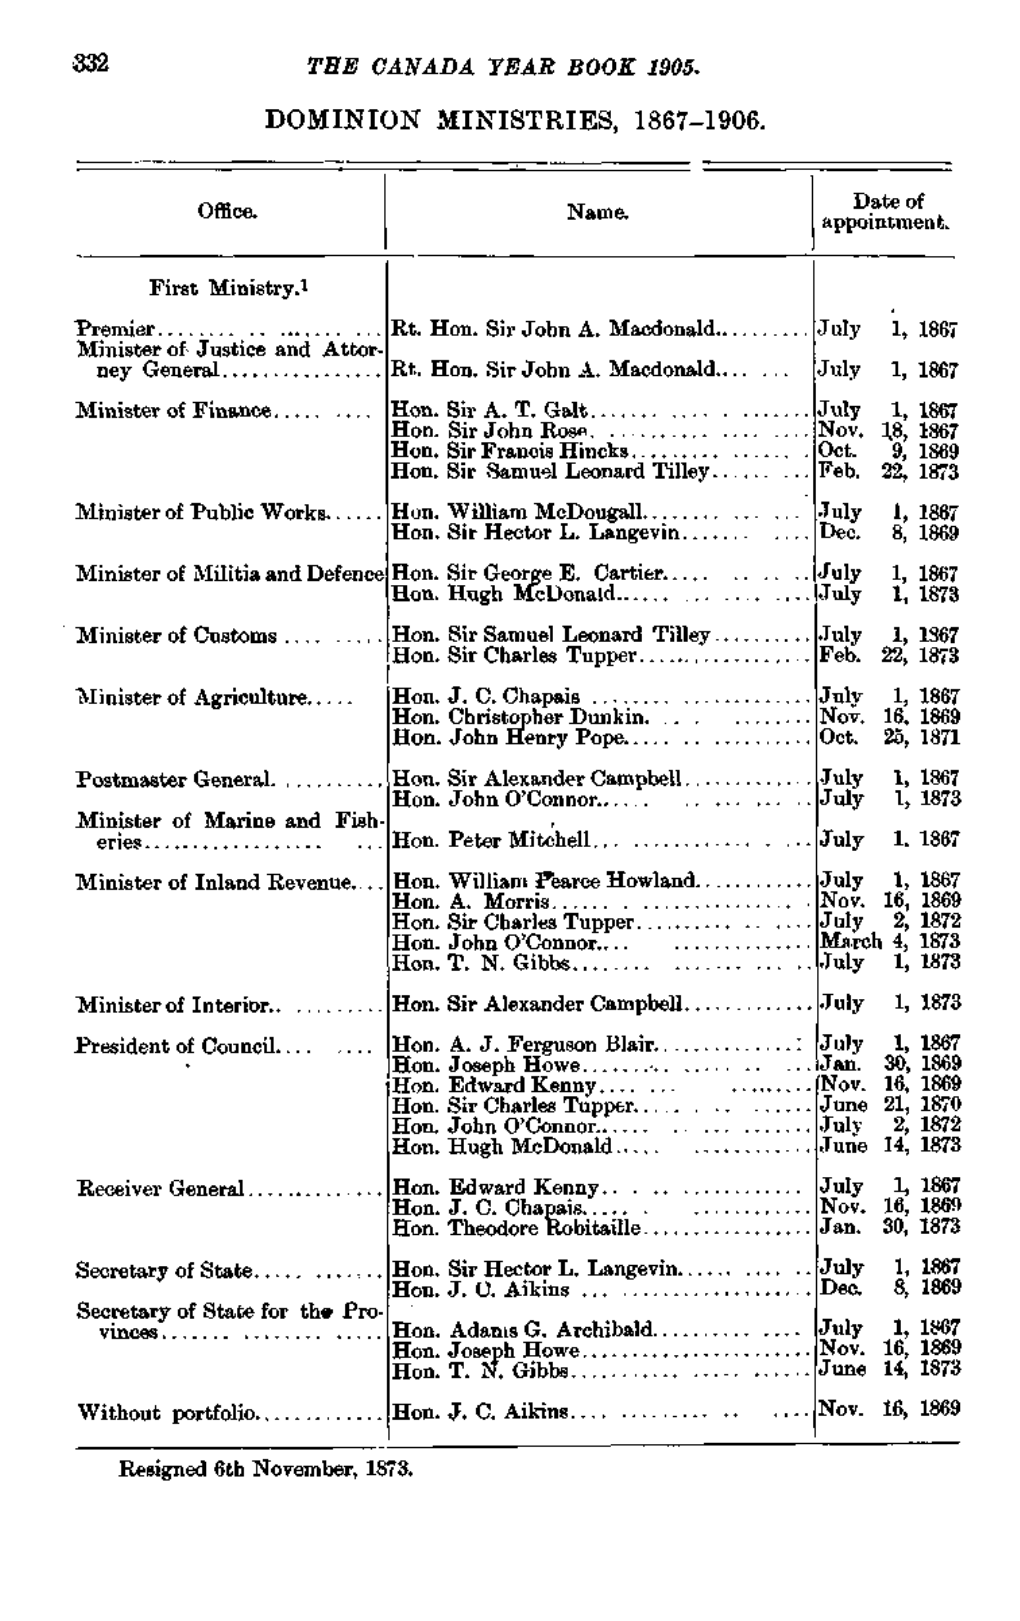 Dominion Ministries, 1867-1906